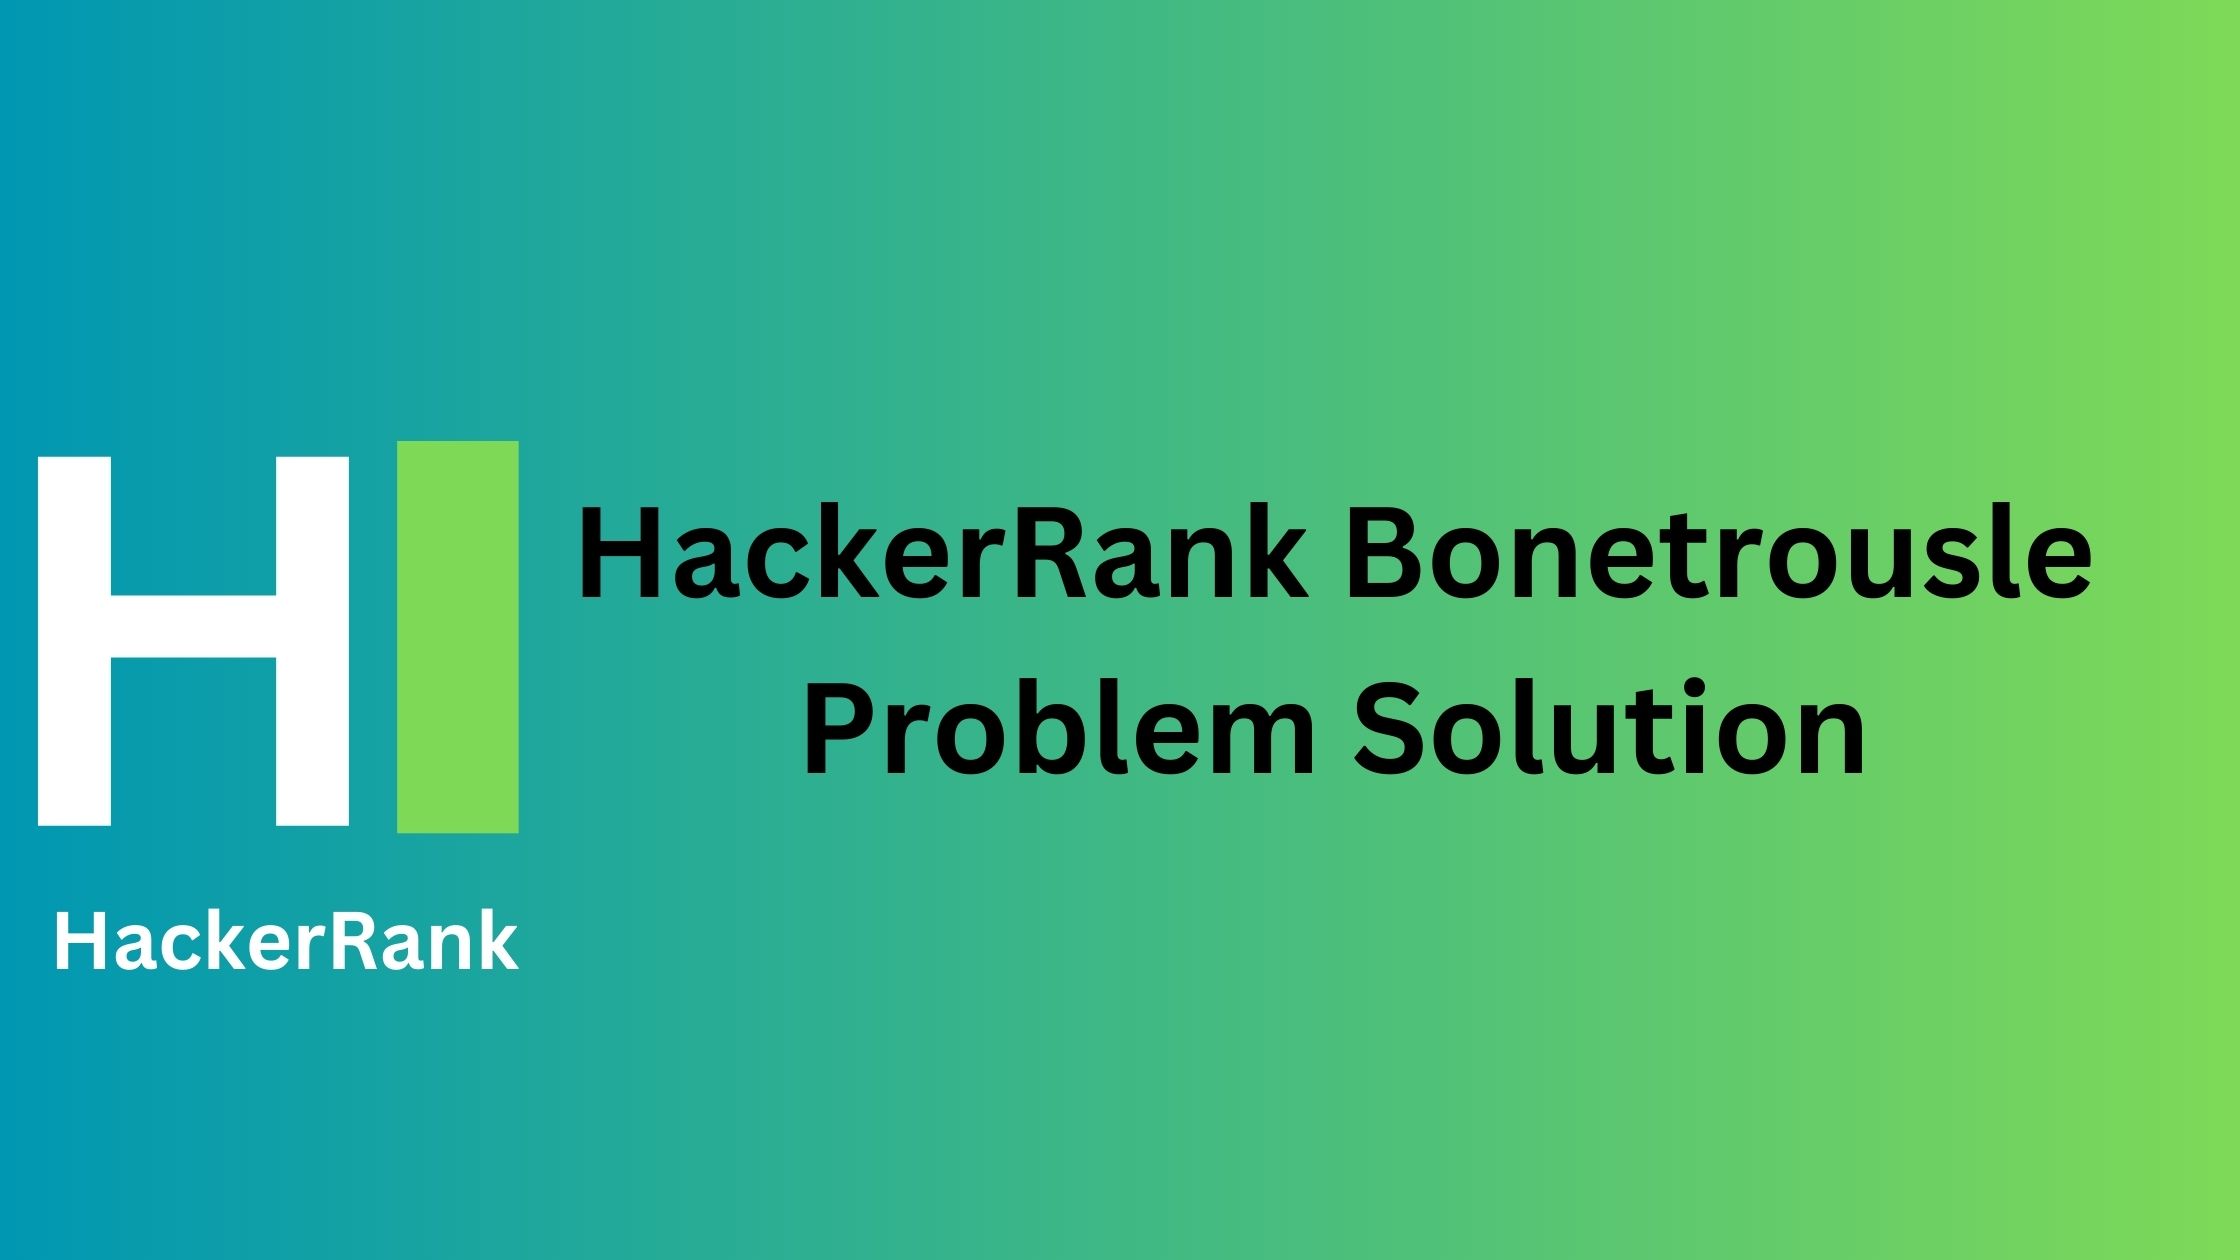 HackerRank Bonetrousle Problem Solution